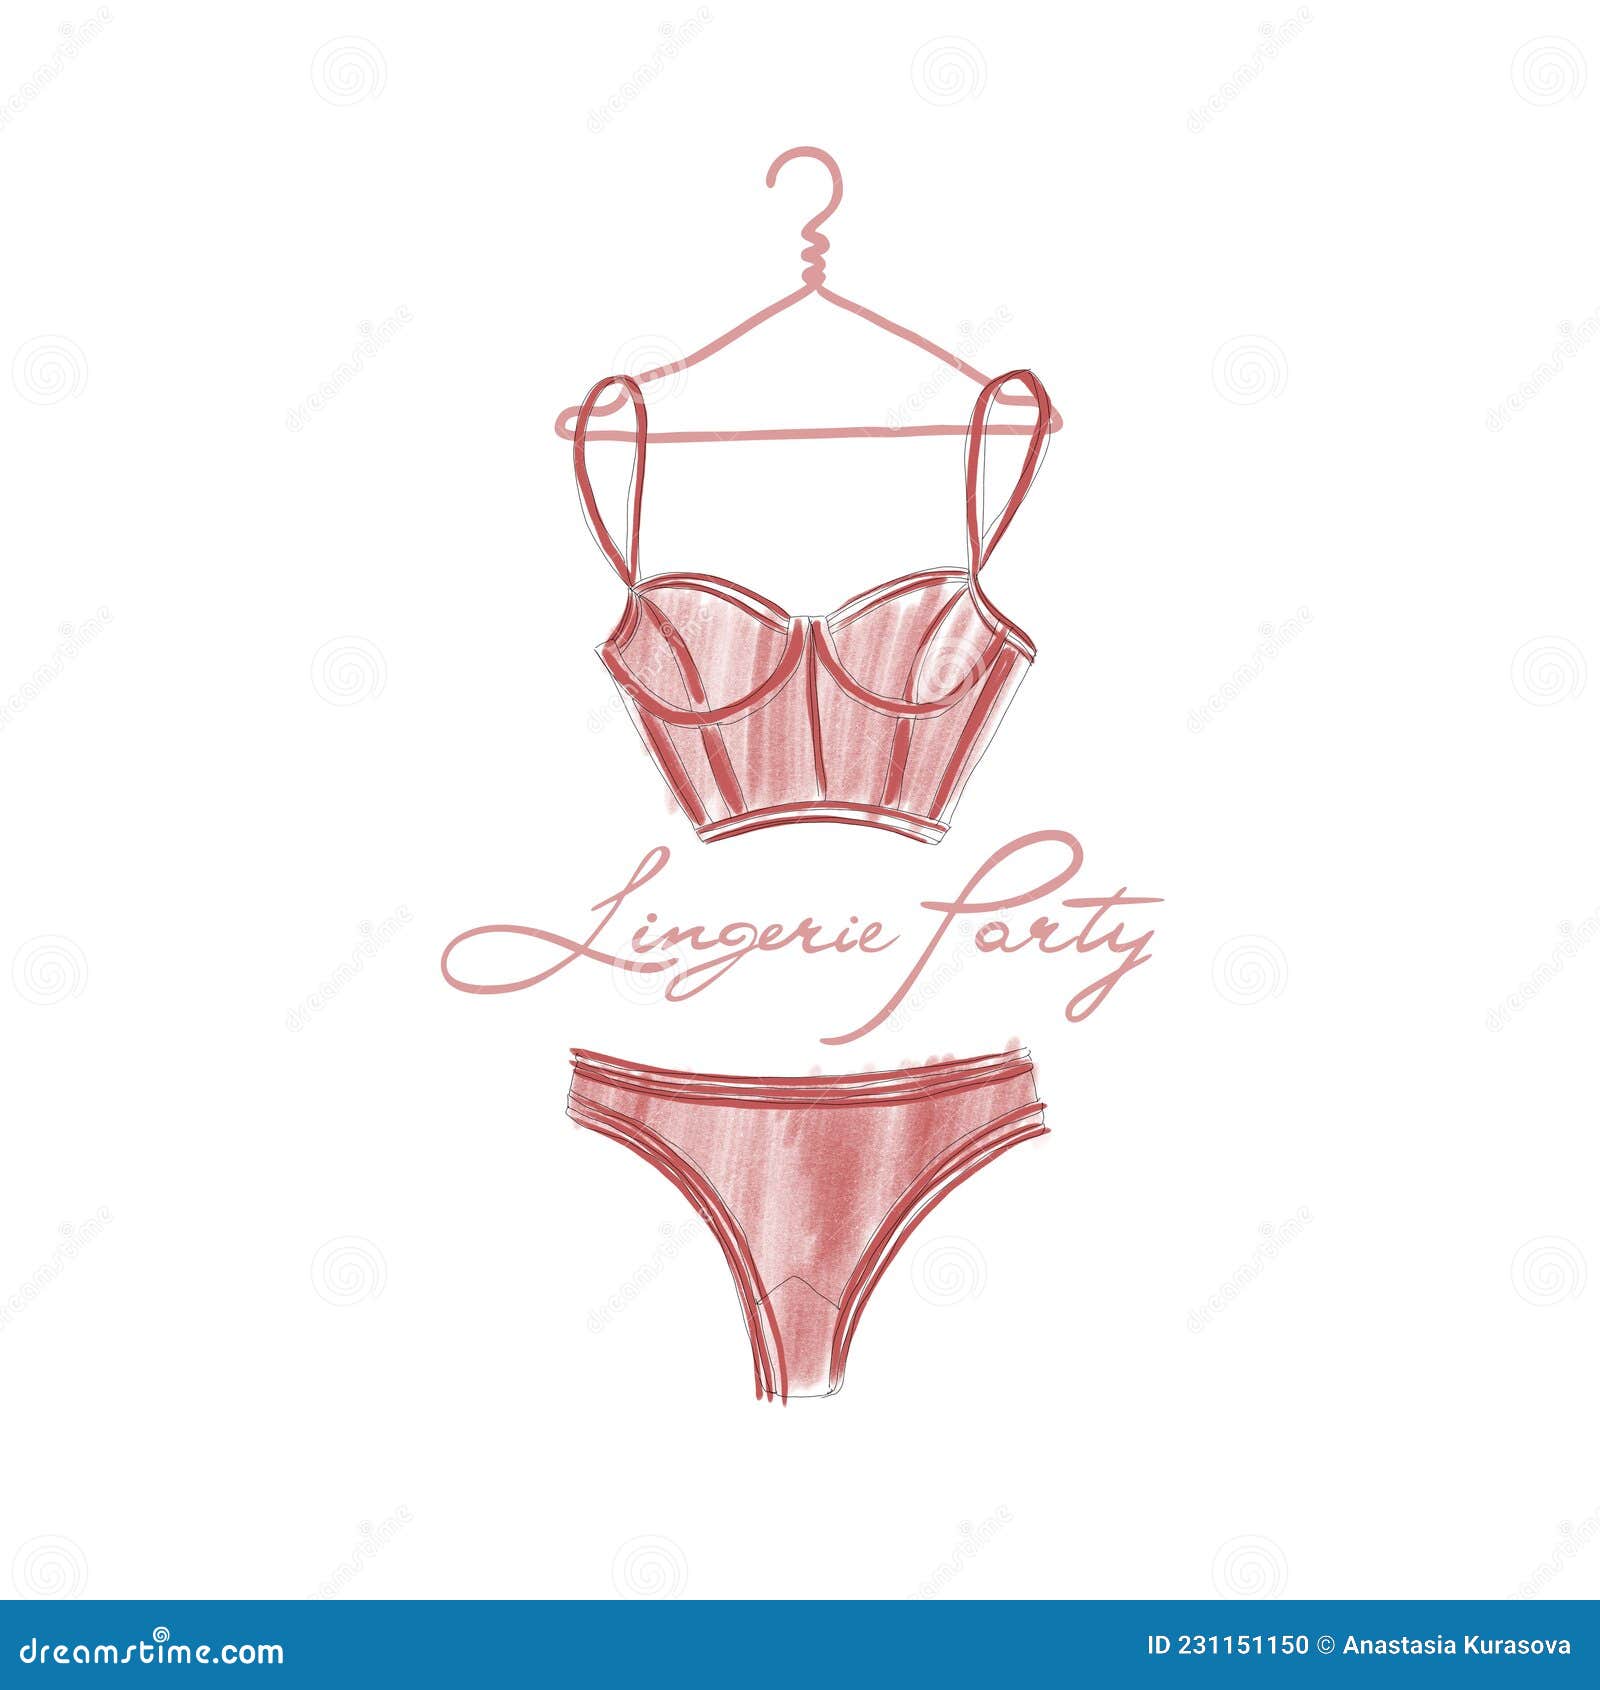 Fashionable Lingerie. Lace Panty and Bra on White Background. Beautiful  Silk, Lace Female Underwear. Stock Illustration - Illustration of style,  undies: 231545223